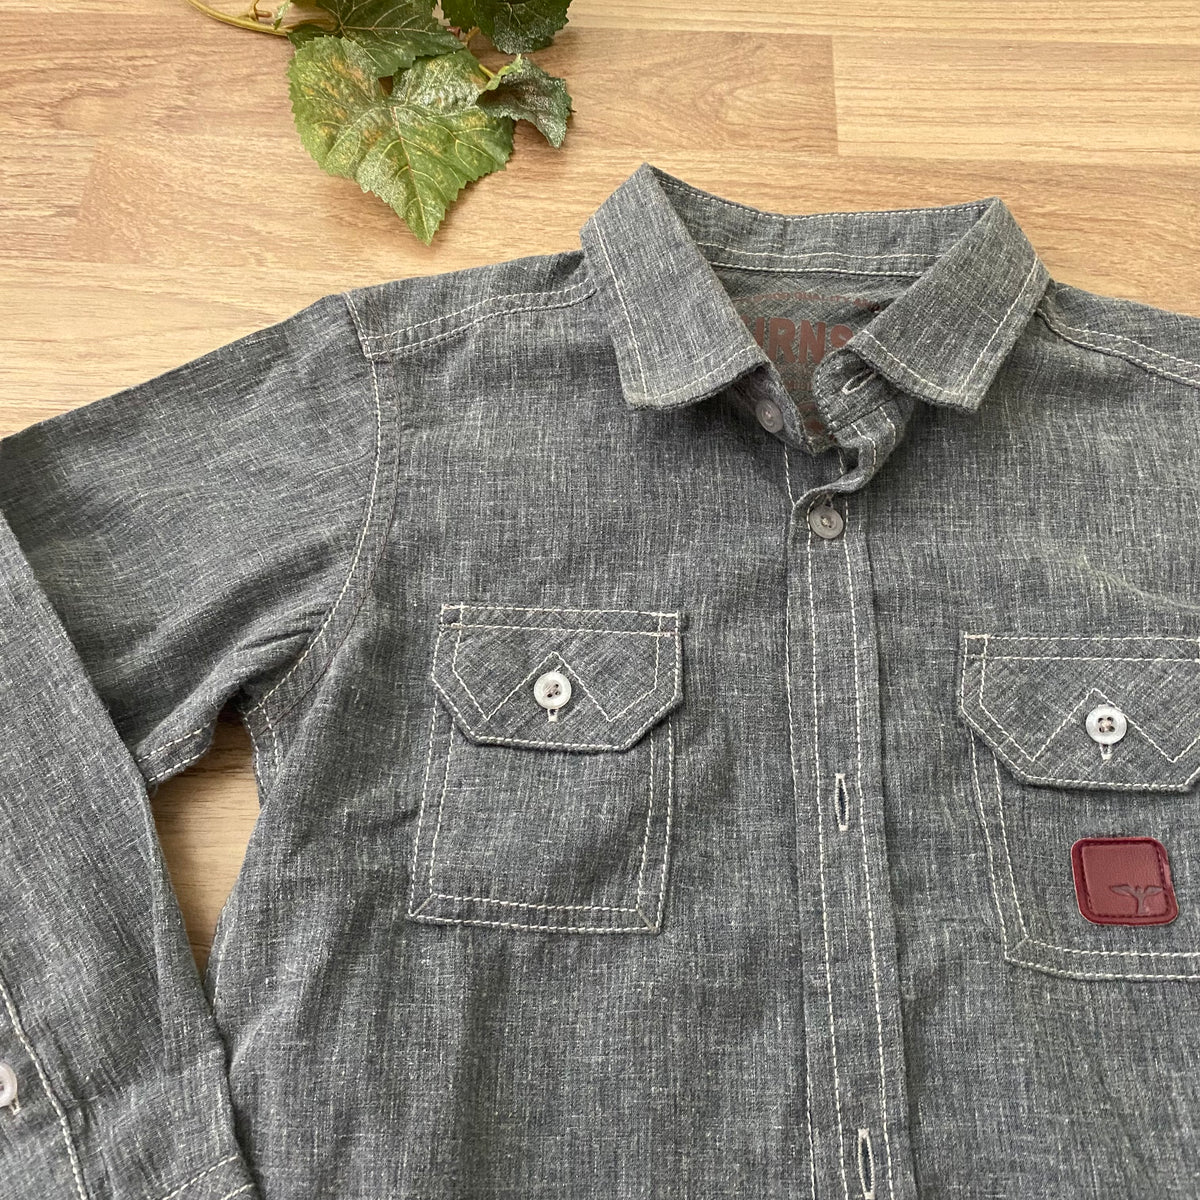 Full Button Up Shirt (Boys Size 6)